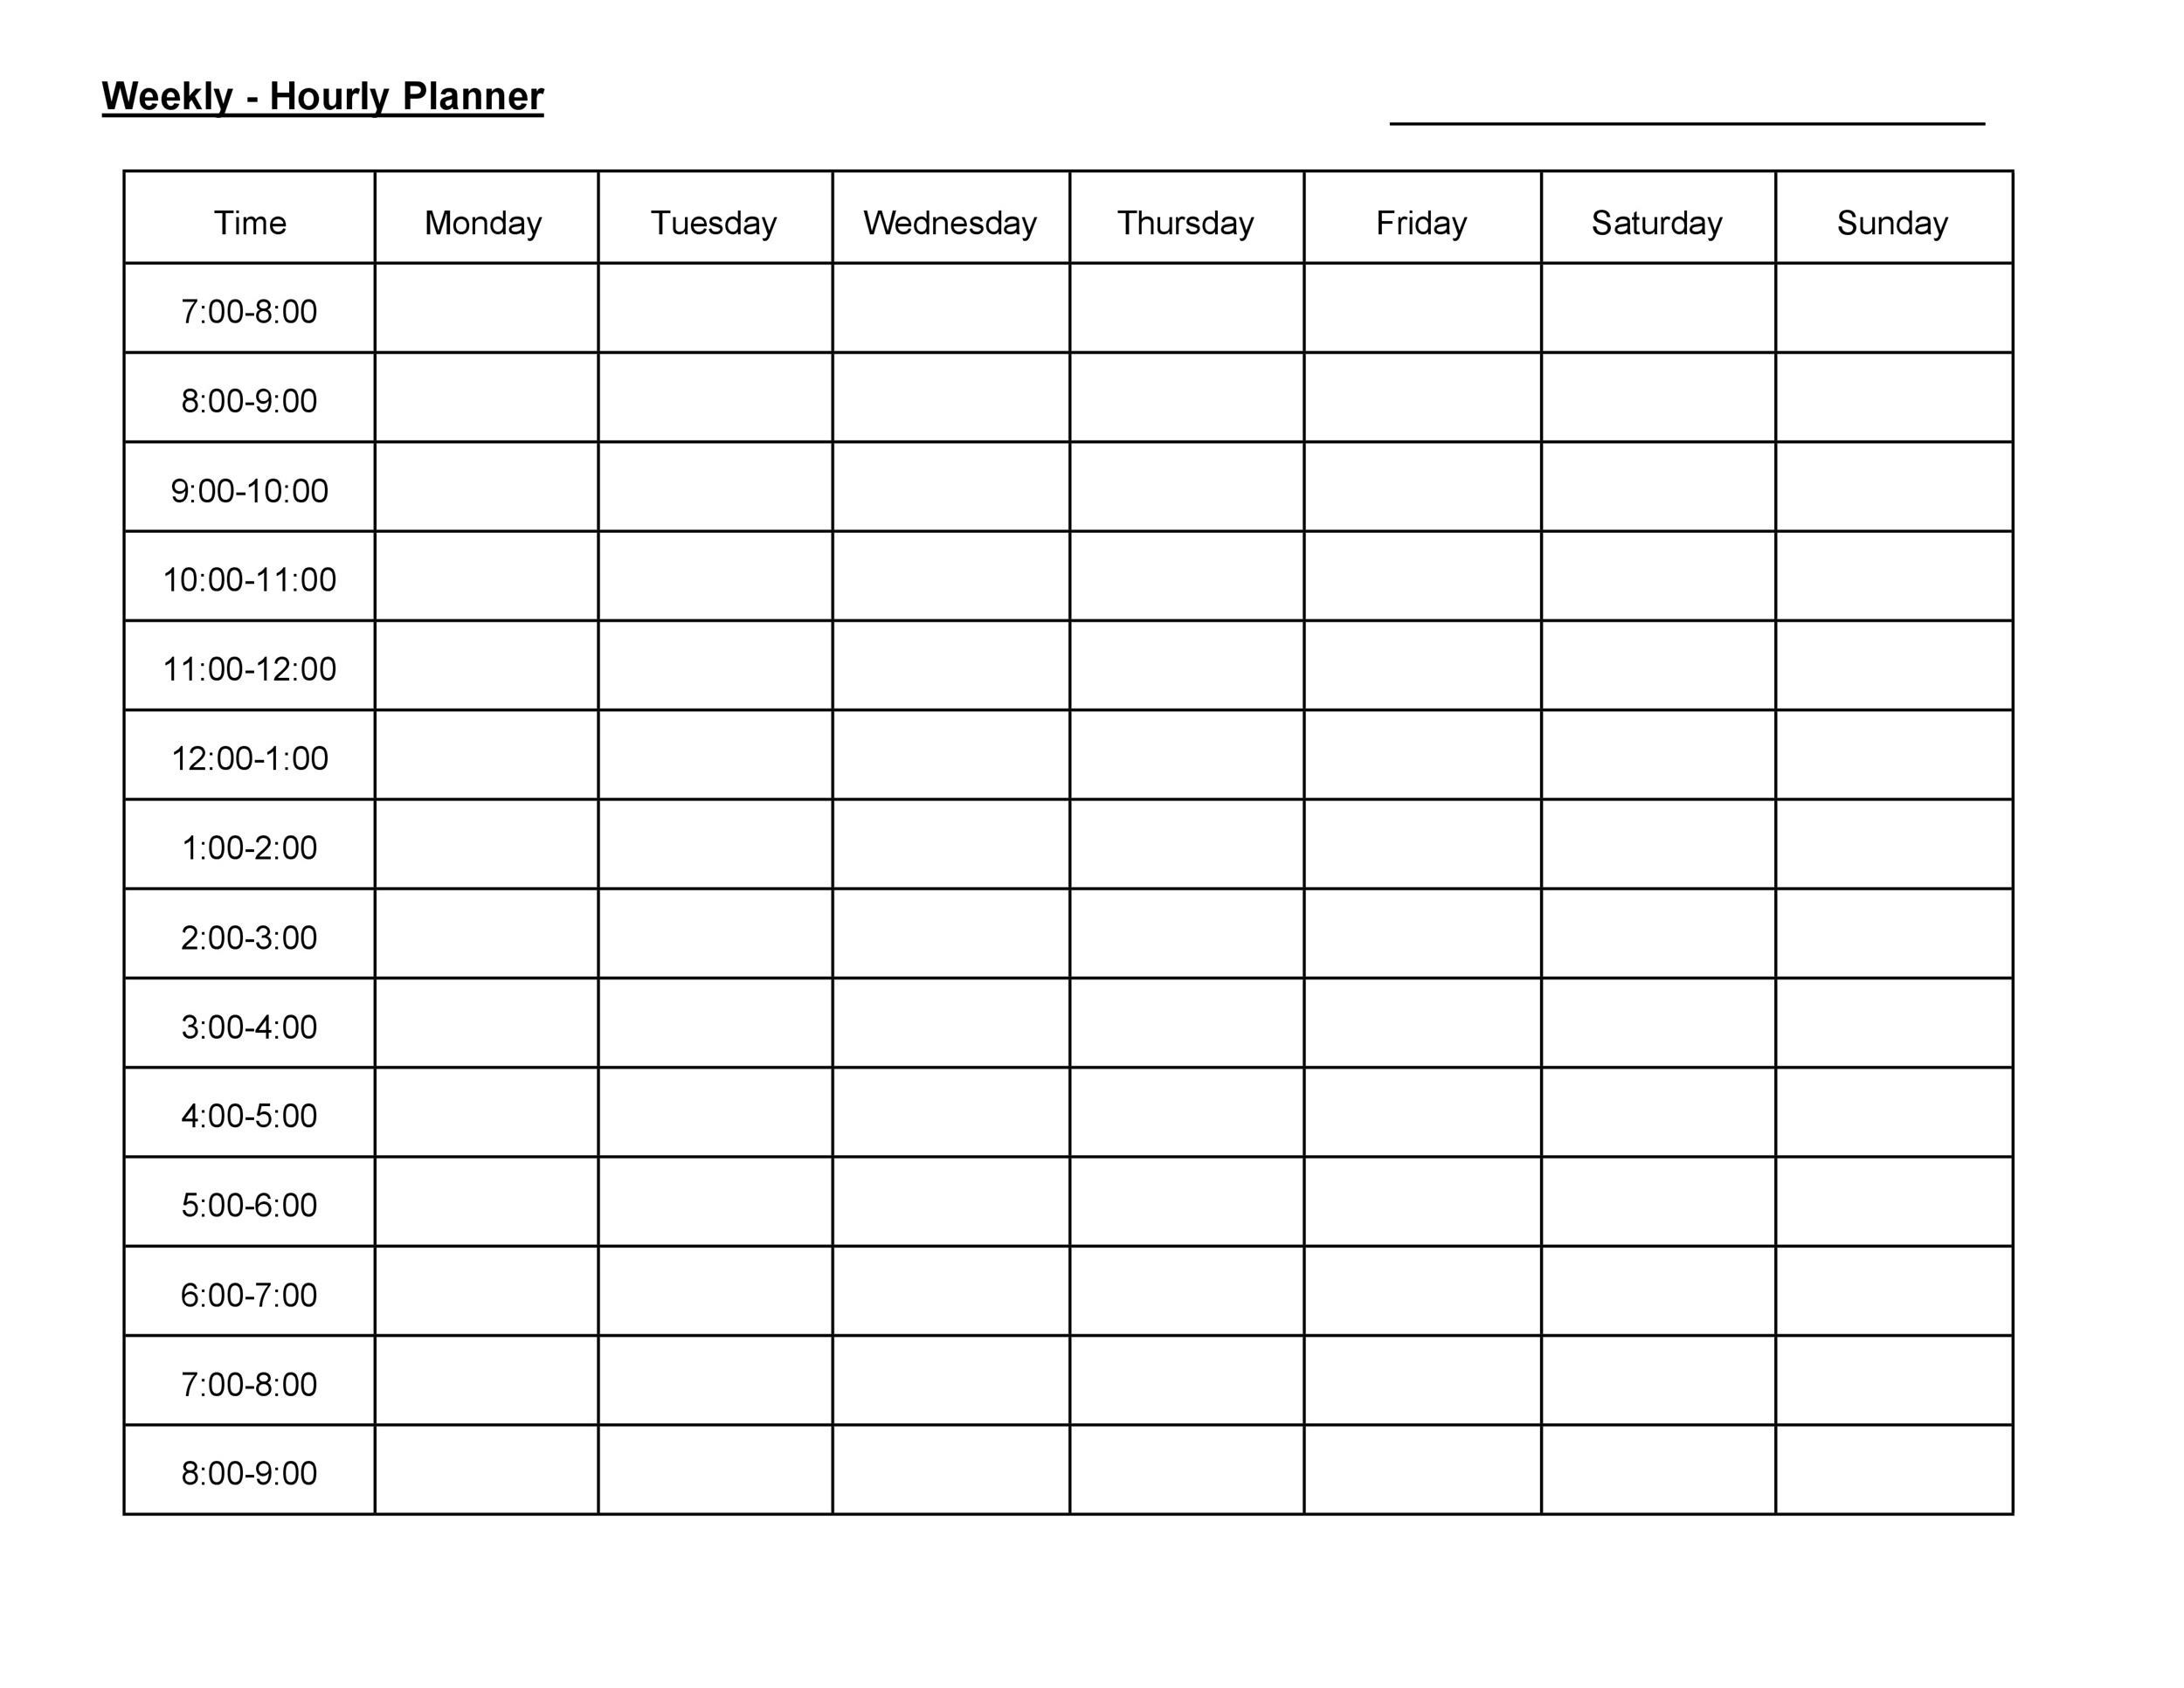 Weekly Hour Schedule Template